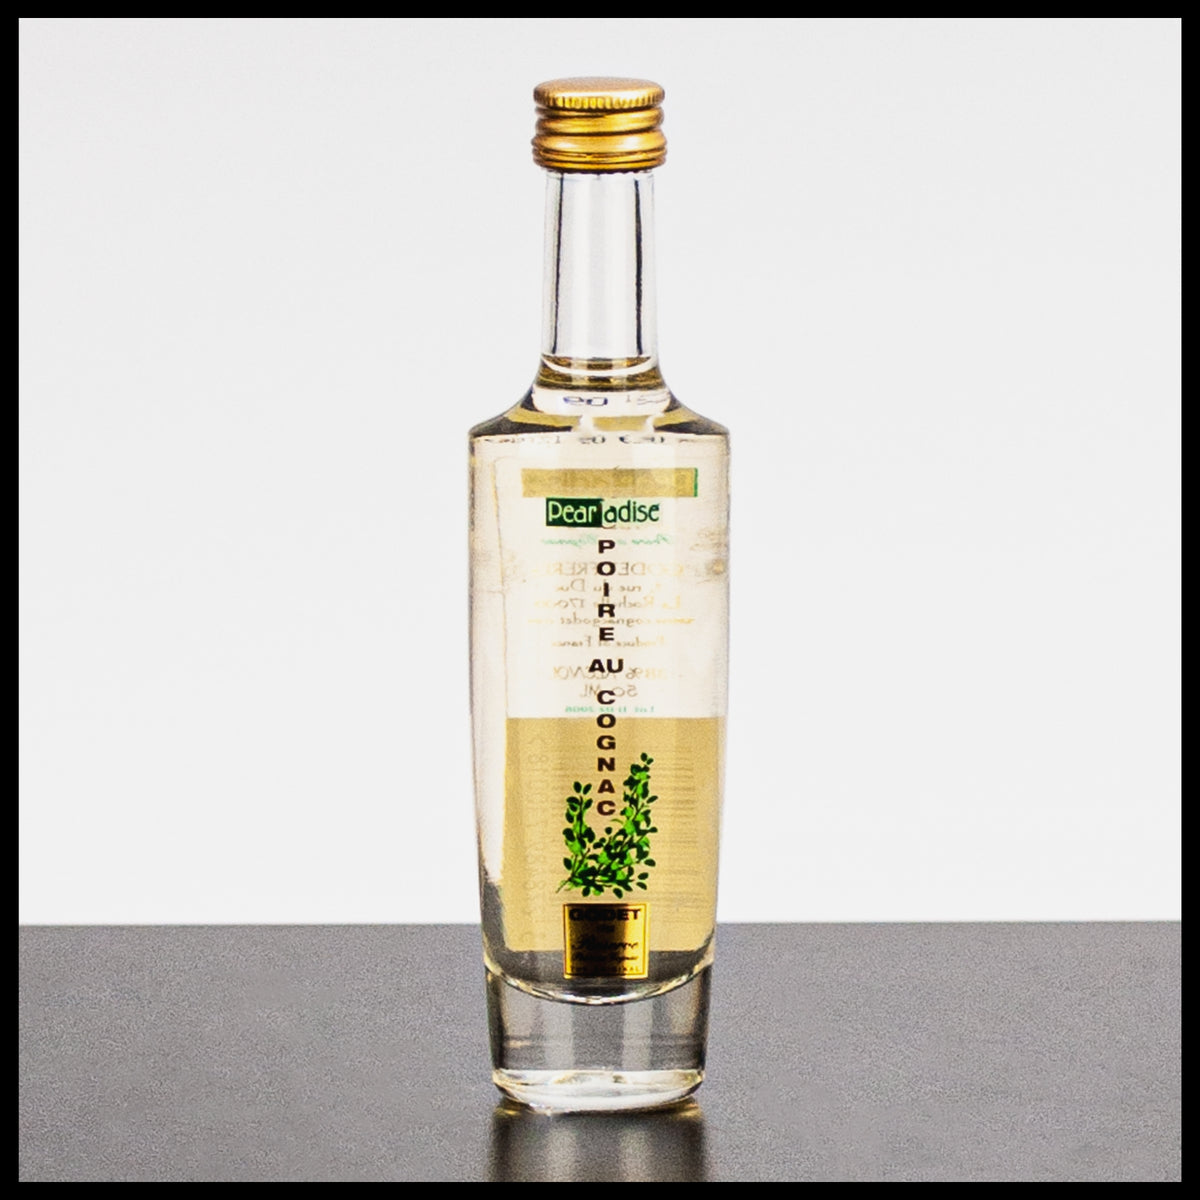 Godet Pearadise Cognac 0,05L - 38% Vol. - Trinklusiv